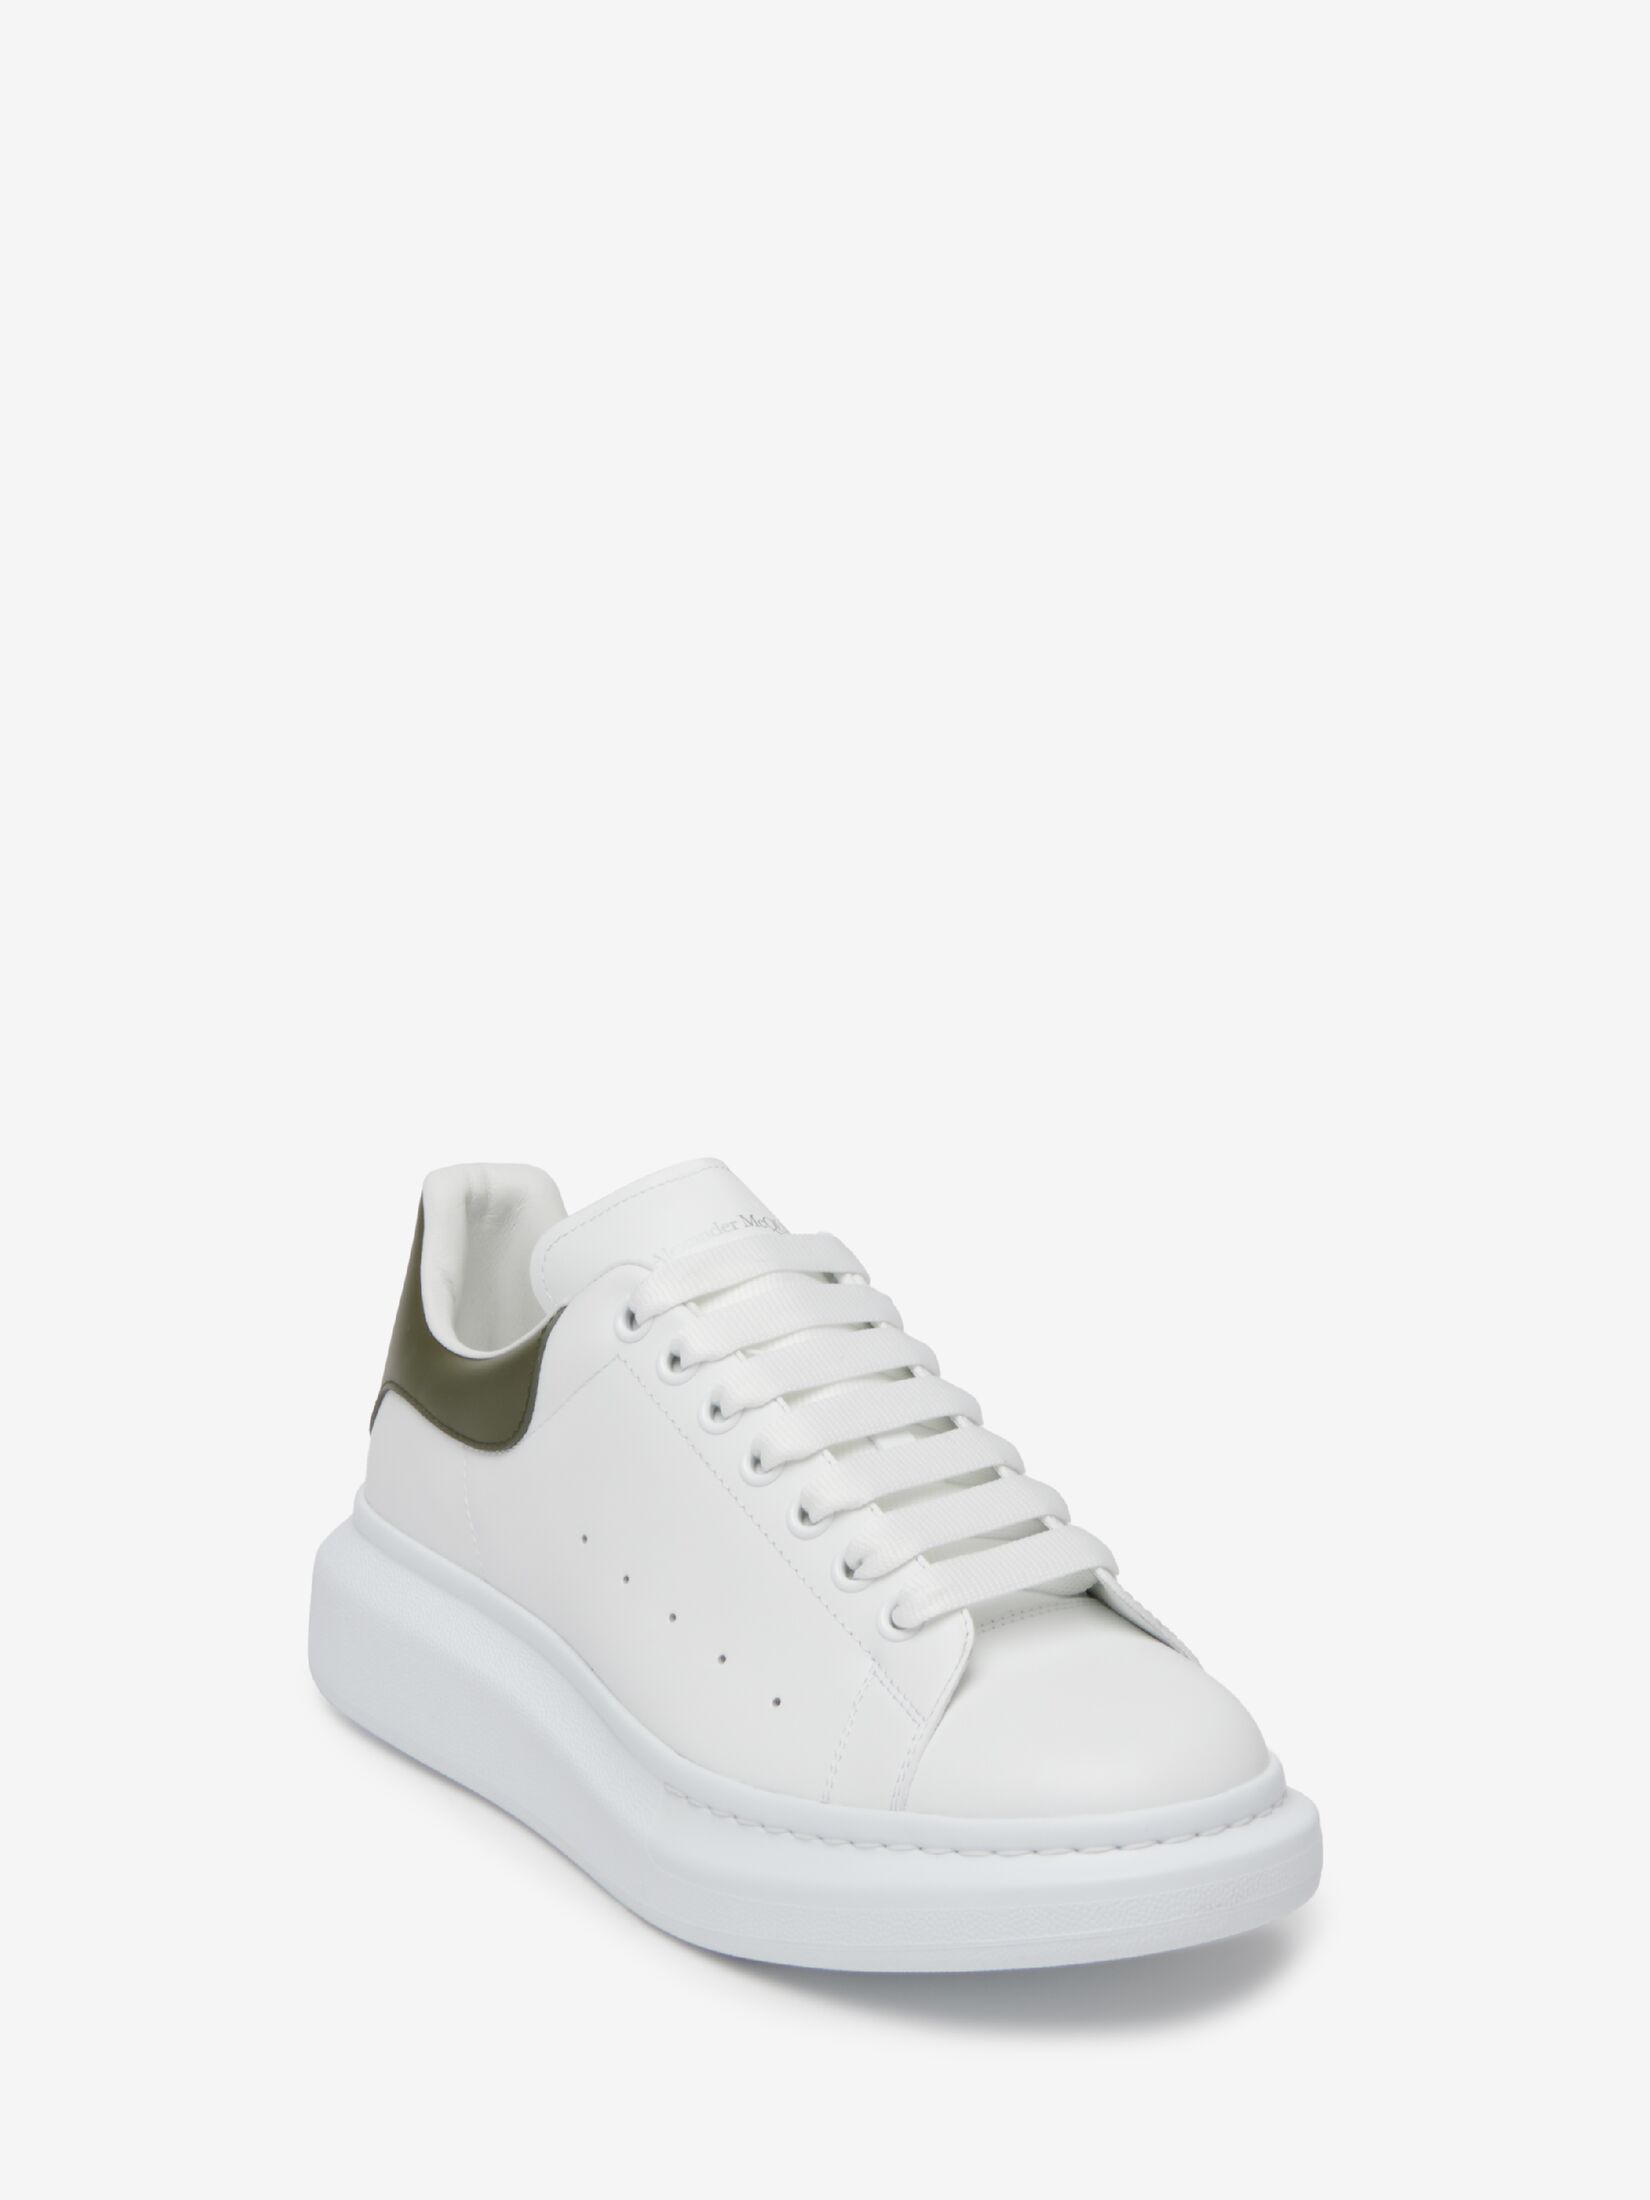 Oversized Sneaker in White/Khaki | Alexander McQueen GB